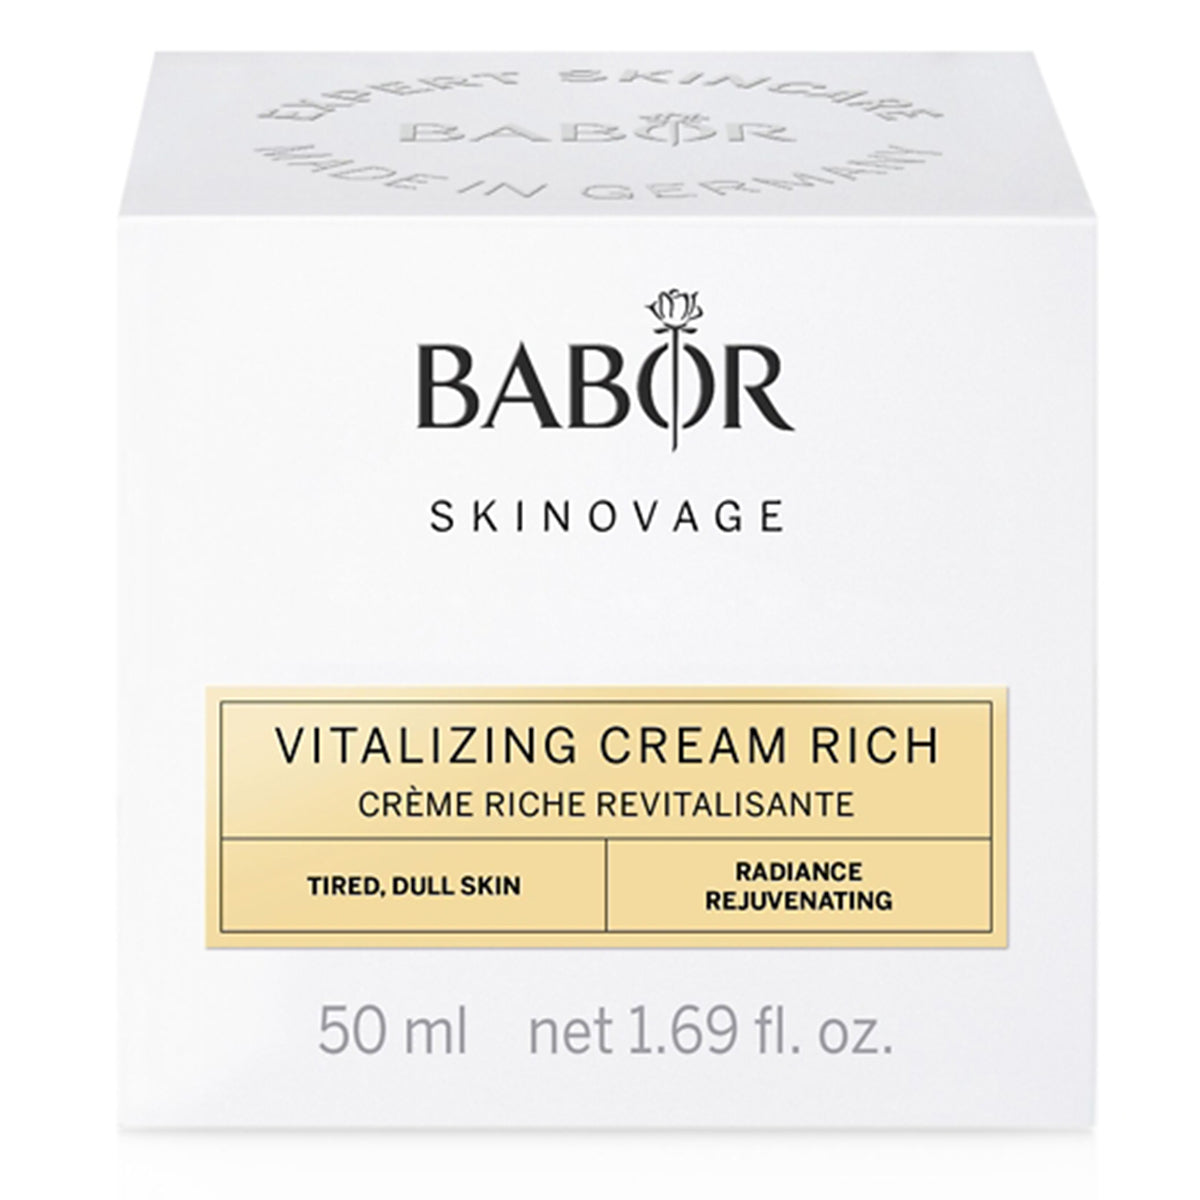 Skinovage Vitalizing Cream Rich 50ml